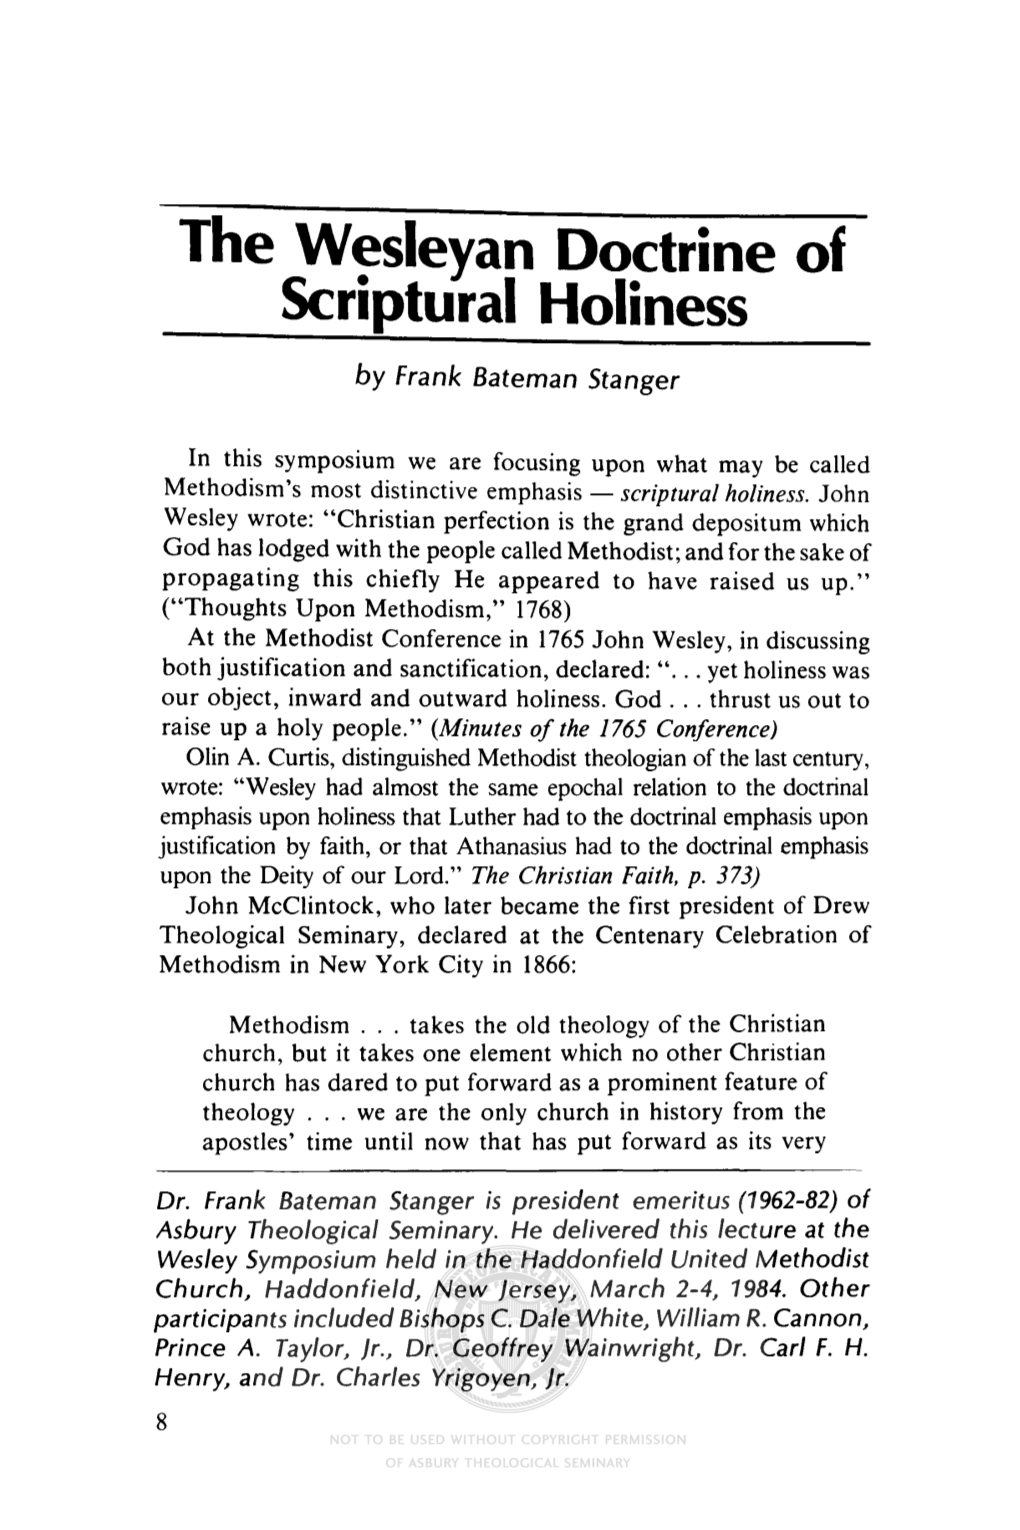 The Wesleyan Doctrine of Scriptural Holiness